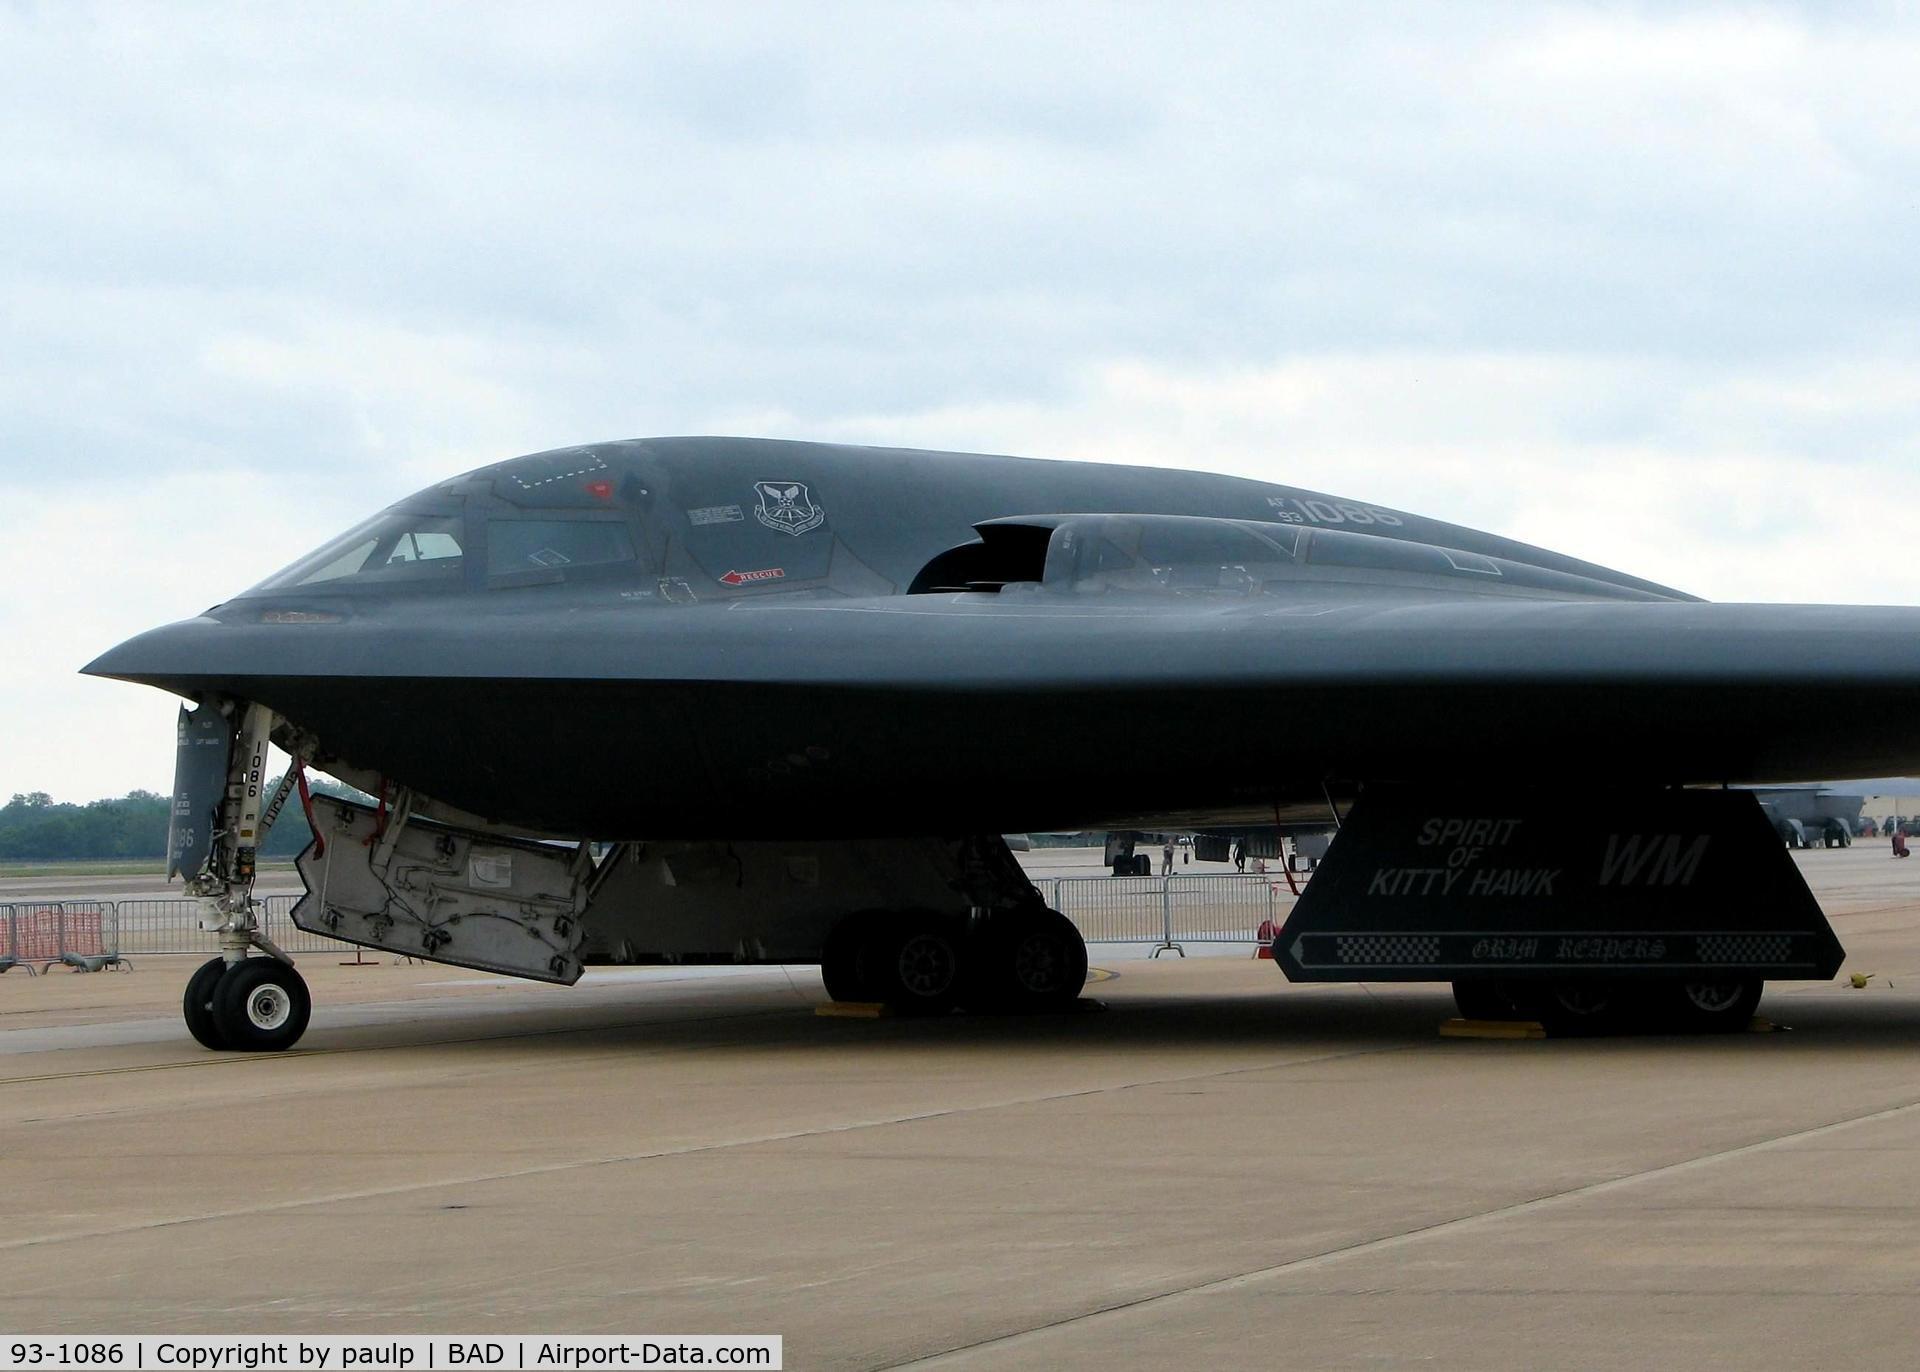 93-1086, 1993 Northrop Grumman B-2A Spirit C/N 1019/AV-19, Barksdale Air Force Base 2011